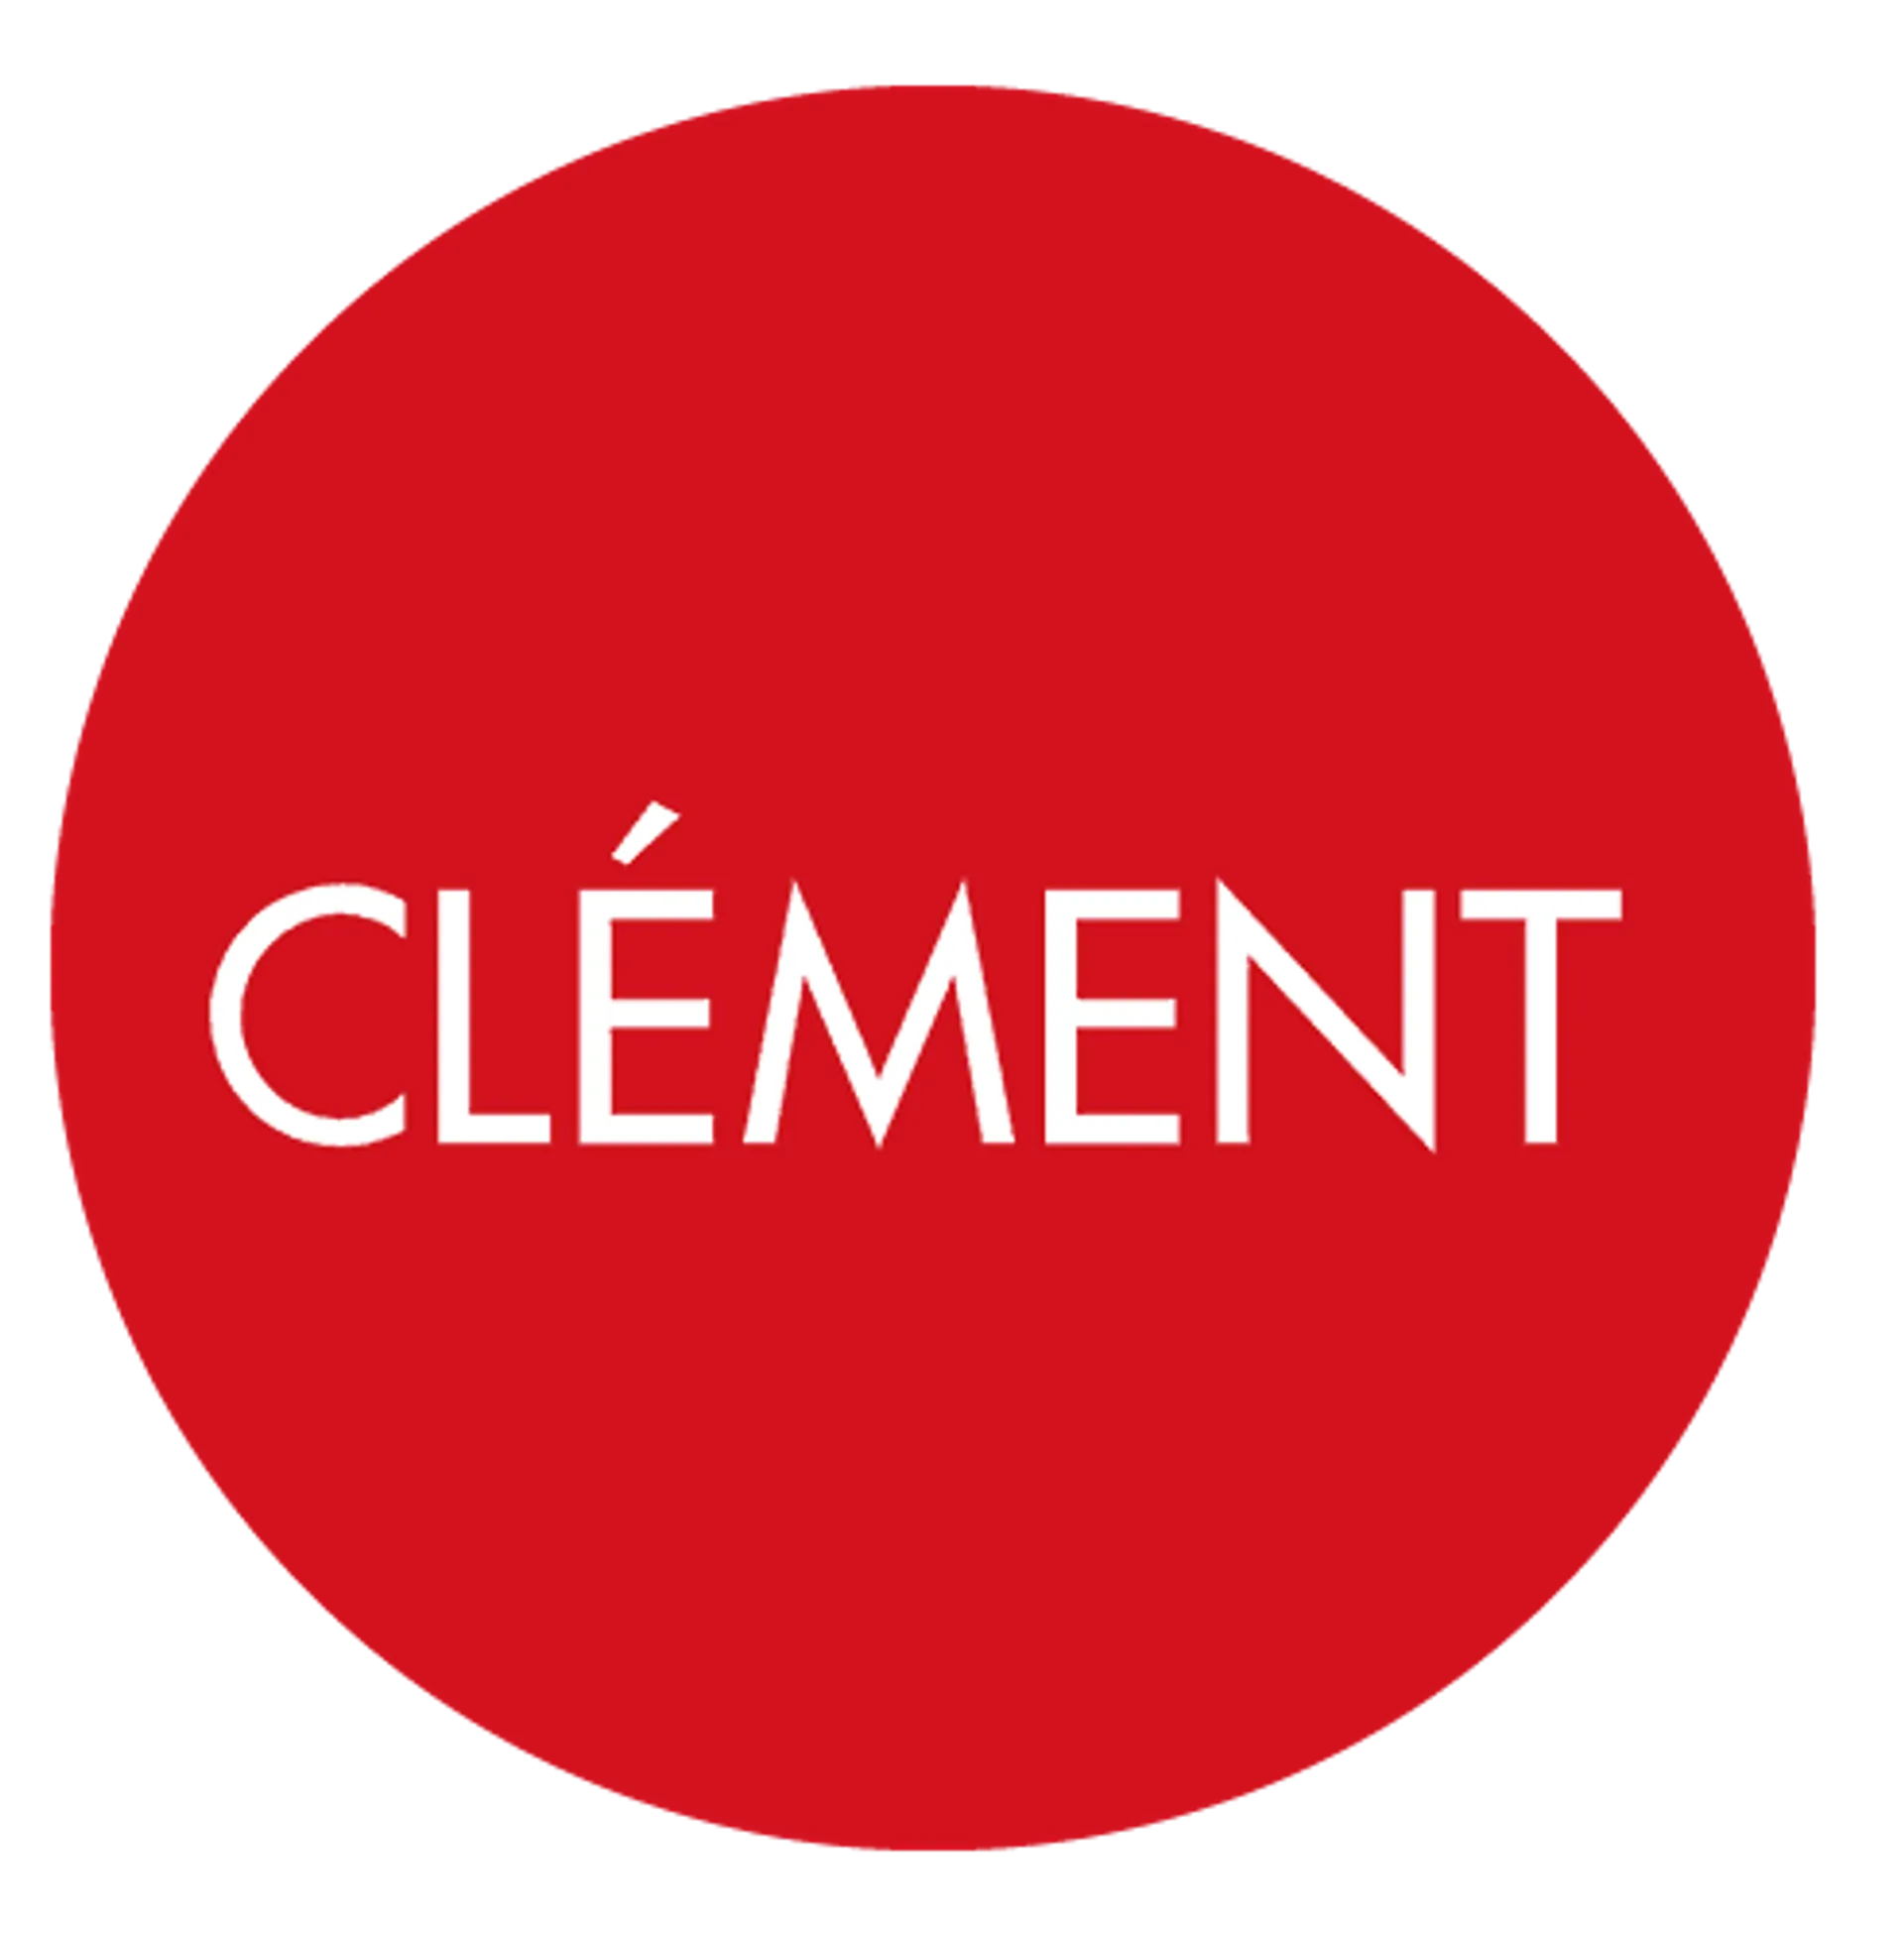 CLEMENT logo de circulaires